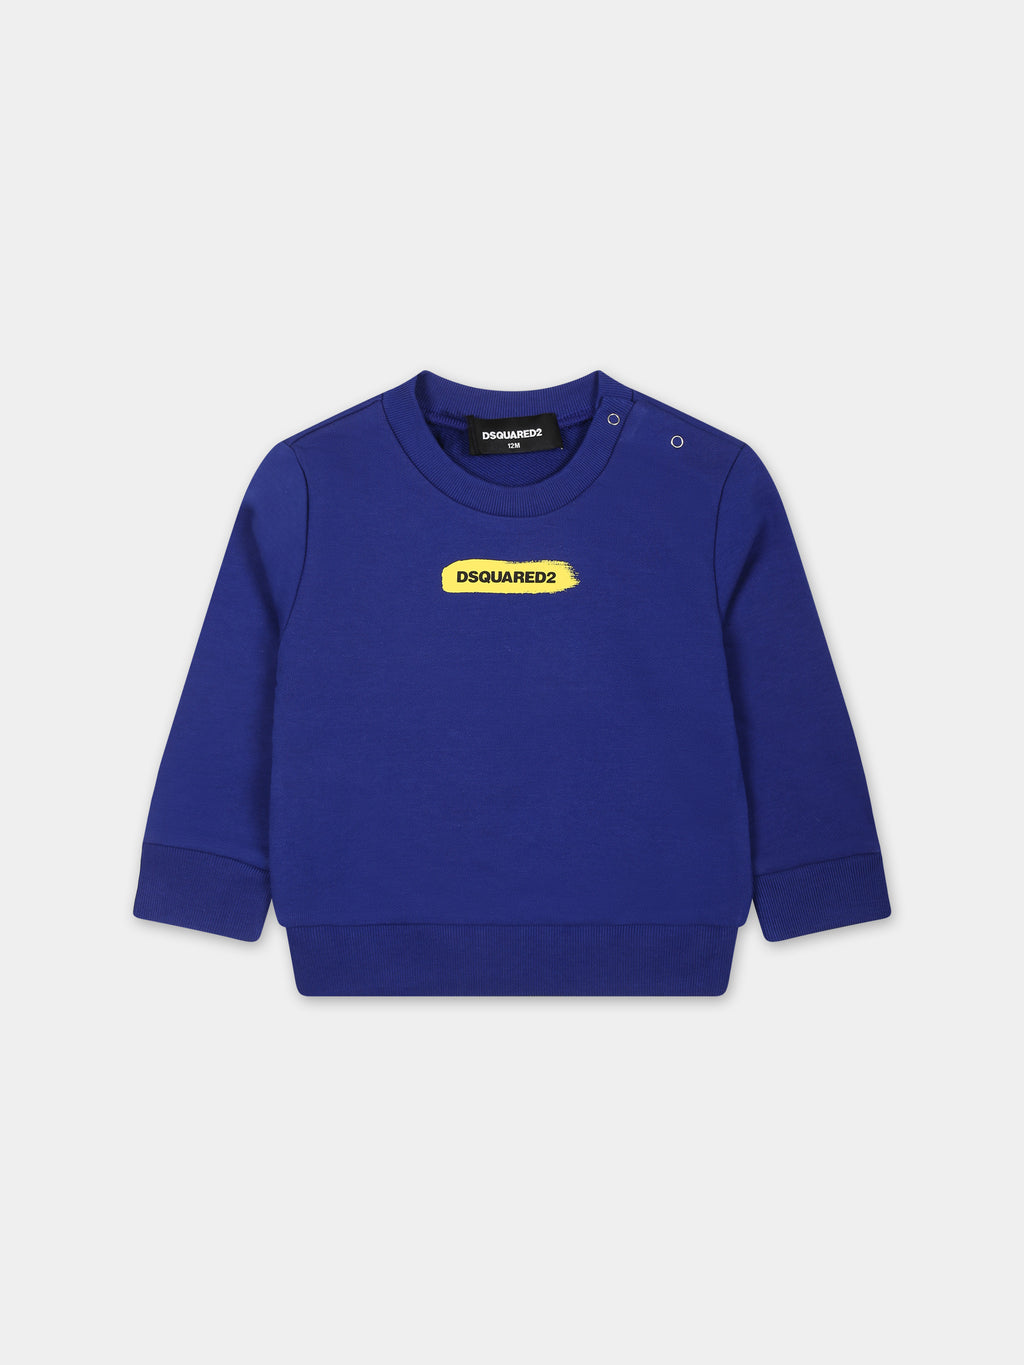 Sweat-shirt bleu ciel pour bébé garçon avec logo